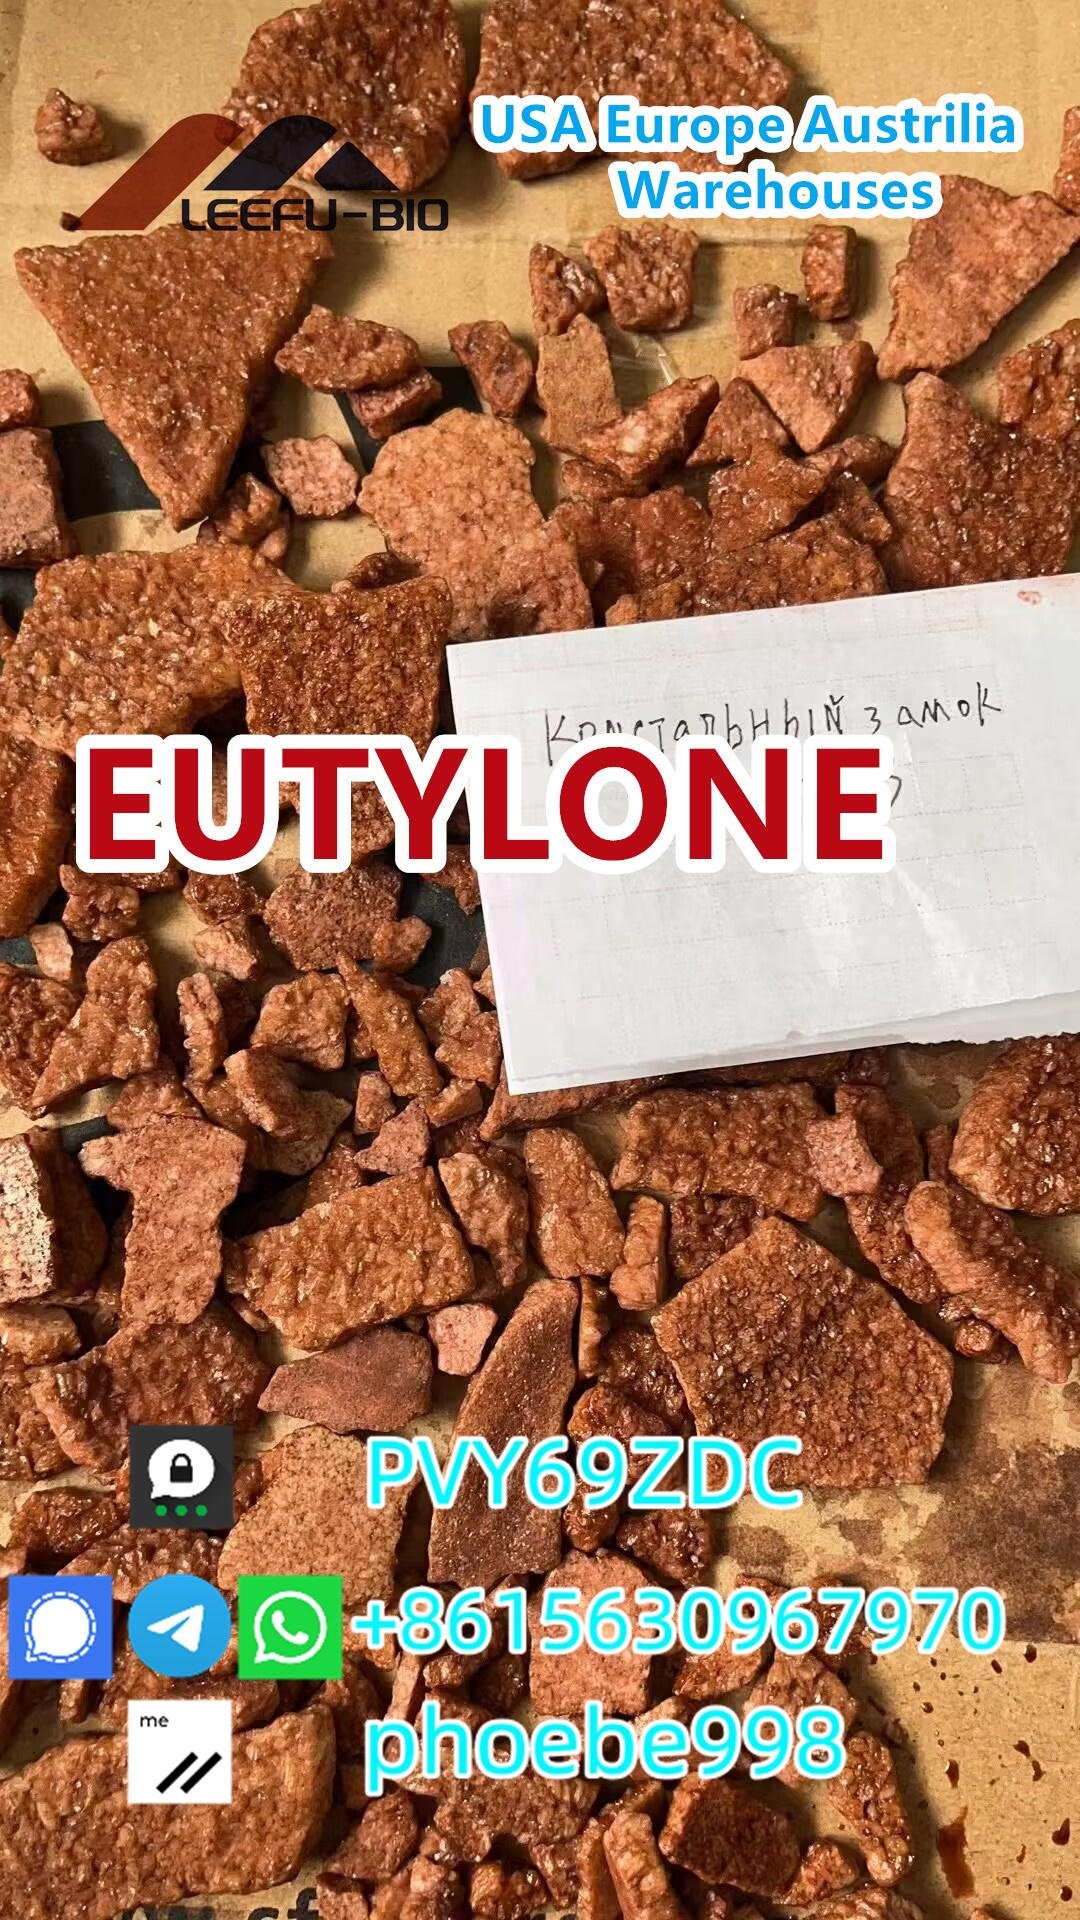 Eutylone EU Crystal in Stock (+8615630967970) 4